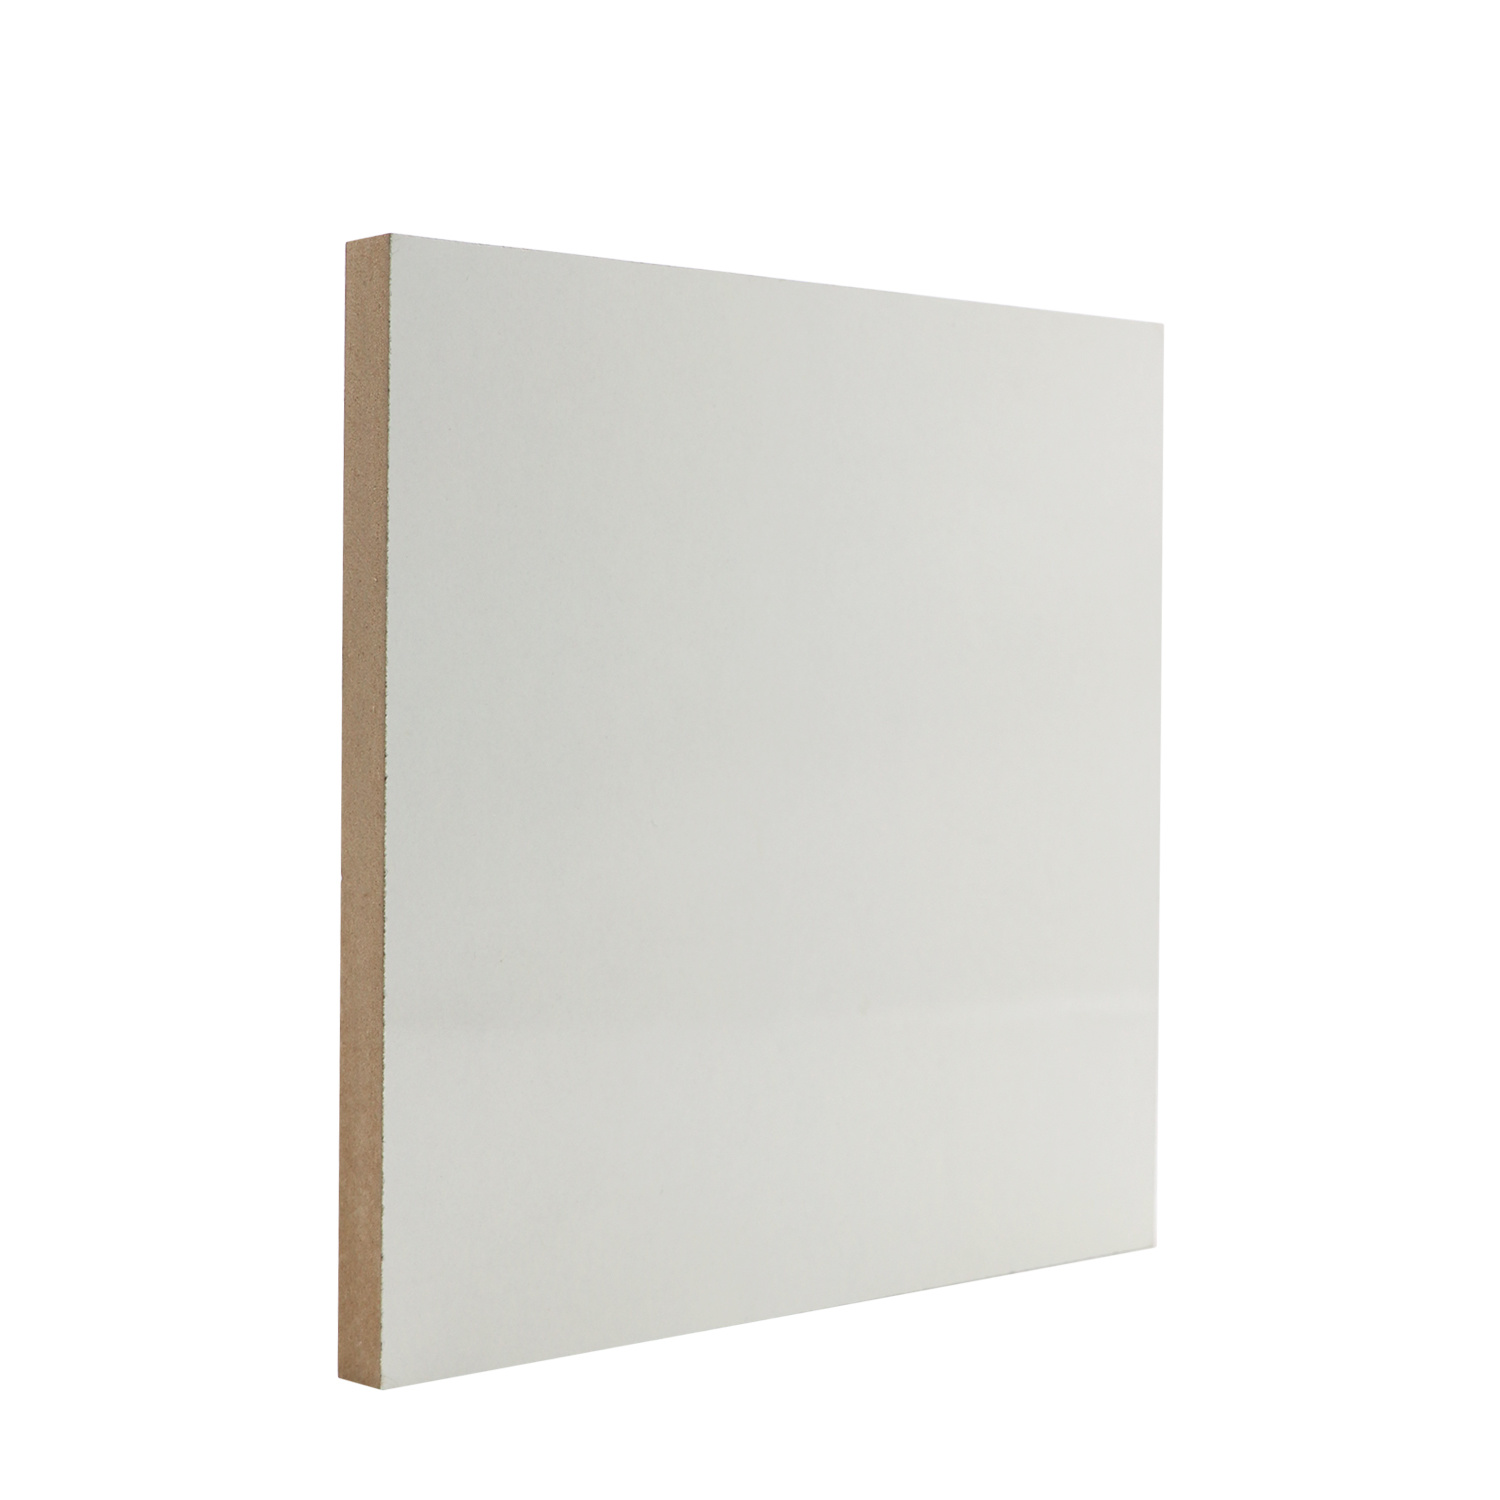 White Melamine Laminated MDF Board for Home Decoration